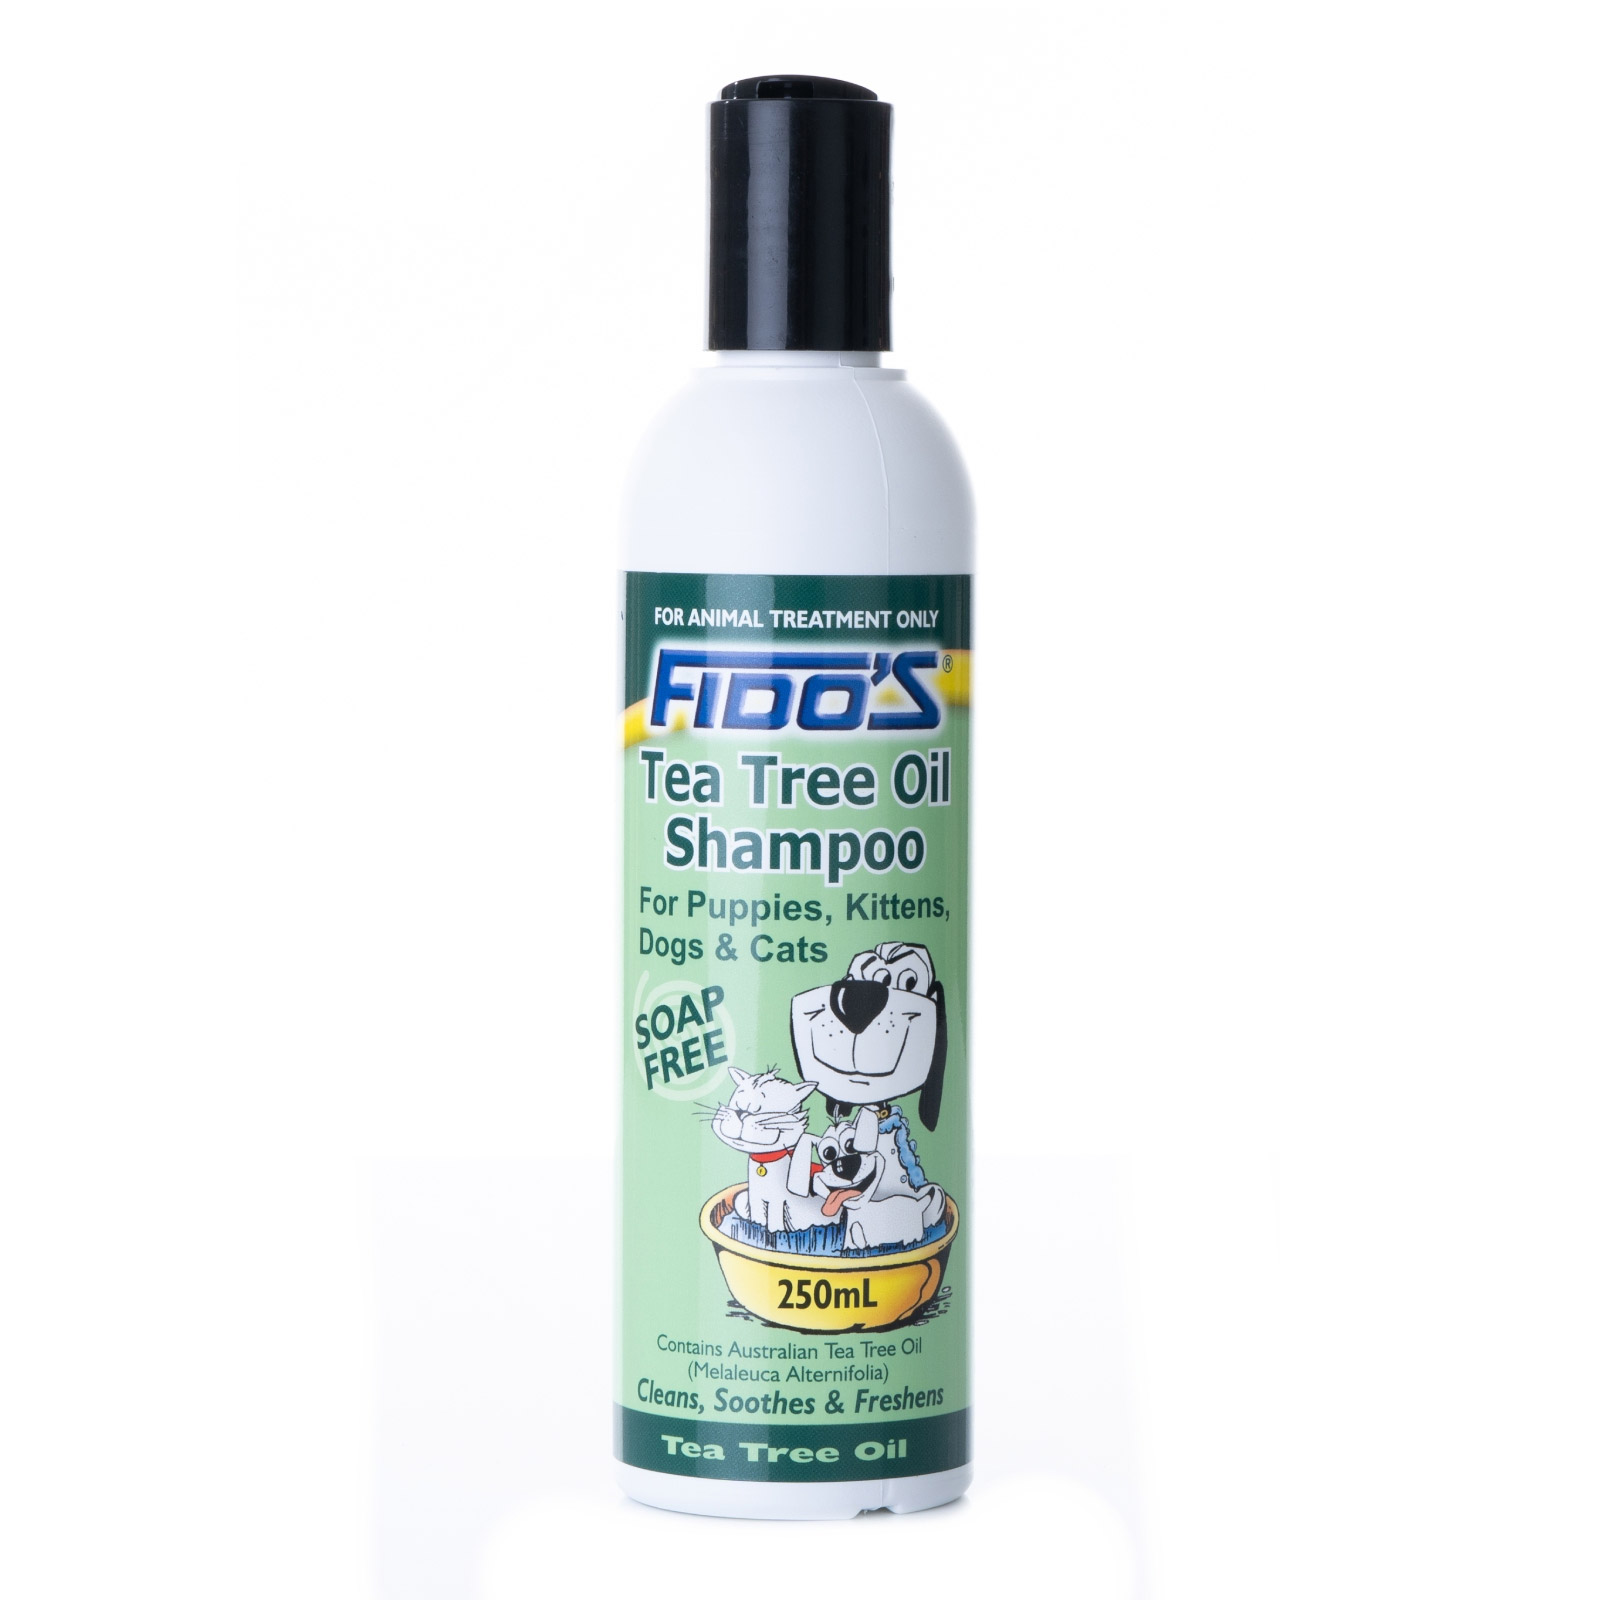 Fido's Tea Tree Oil Shampoo for Dogs